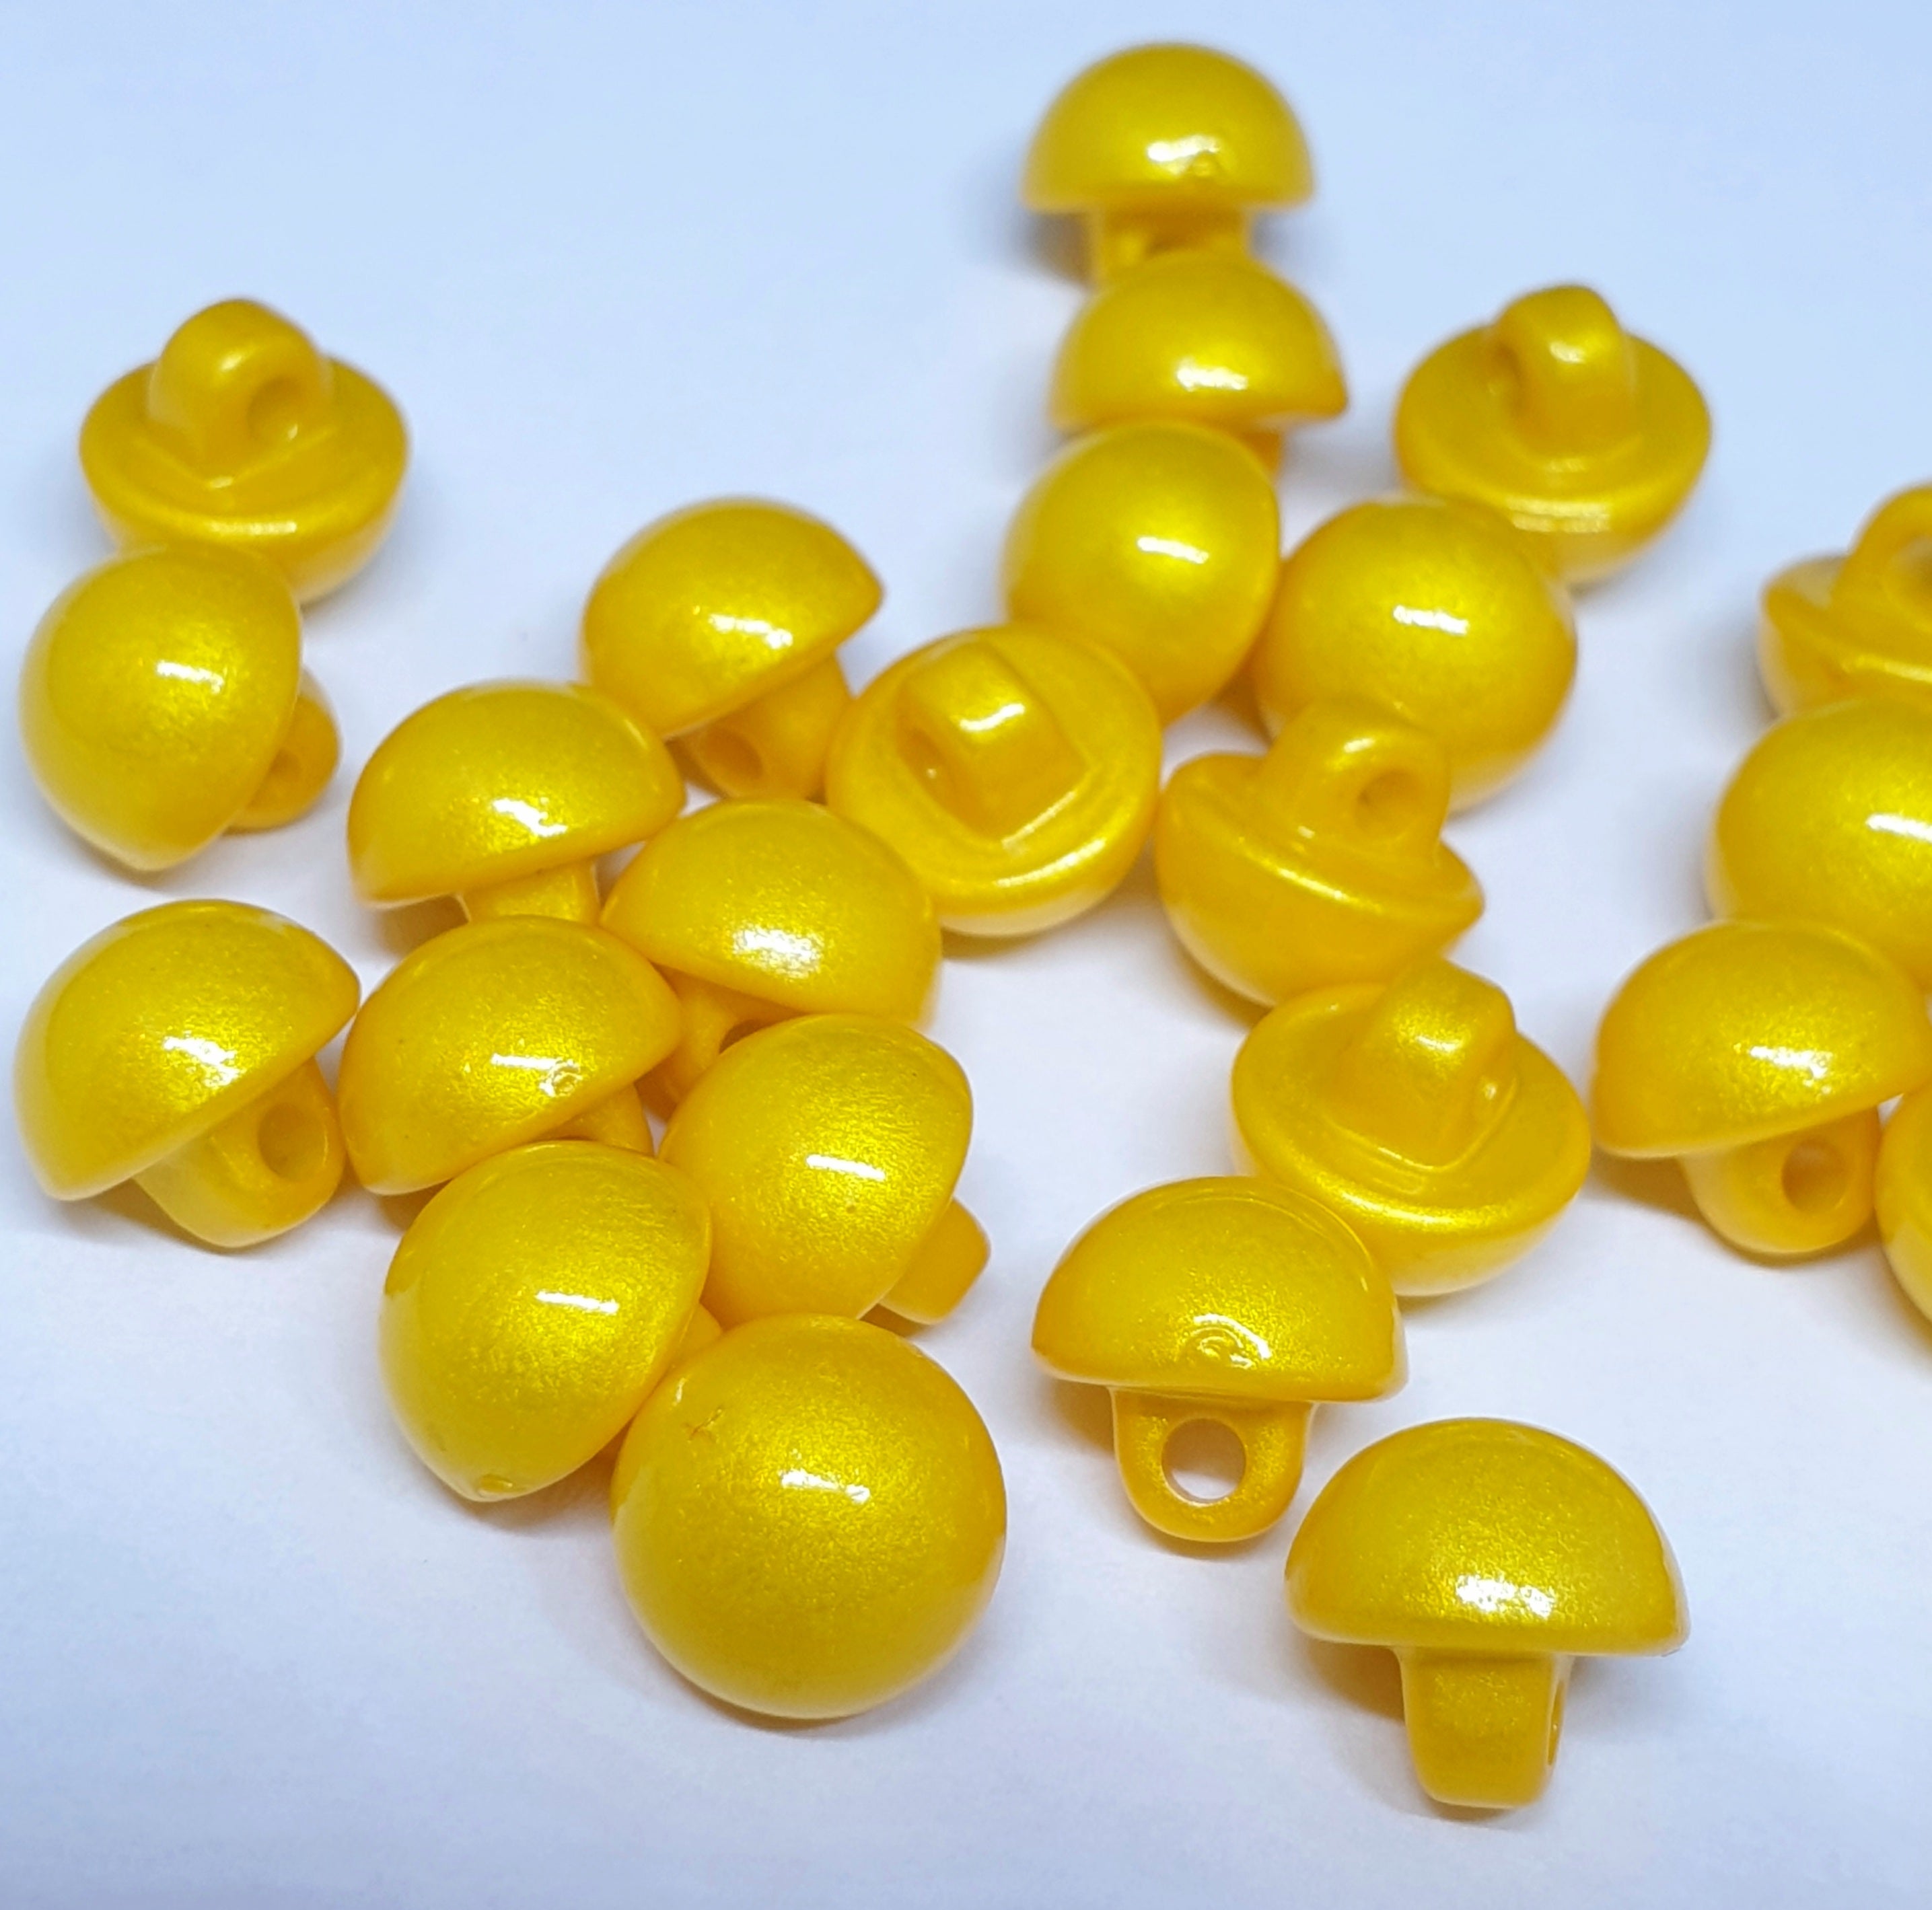 MajorCrafts 30pcs 8mm Yellow High-Grade Acrylic Small Round Sewing Mushroom Shank Buttons